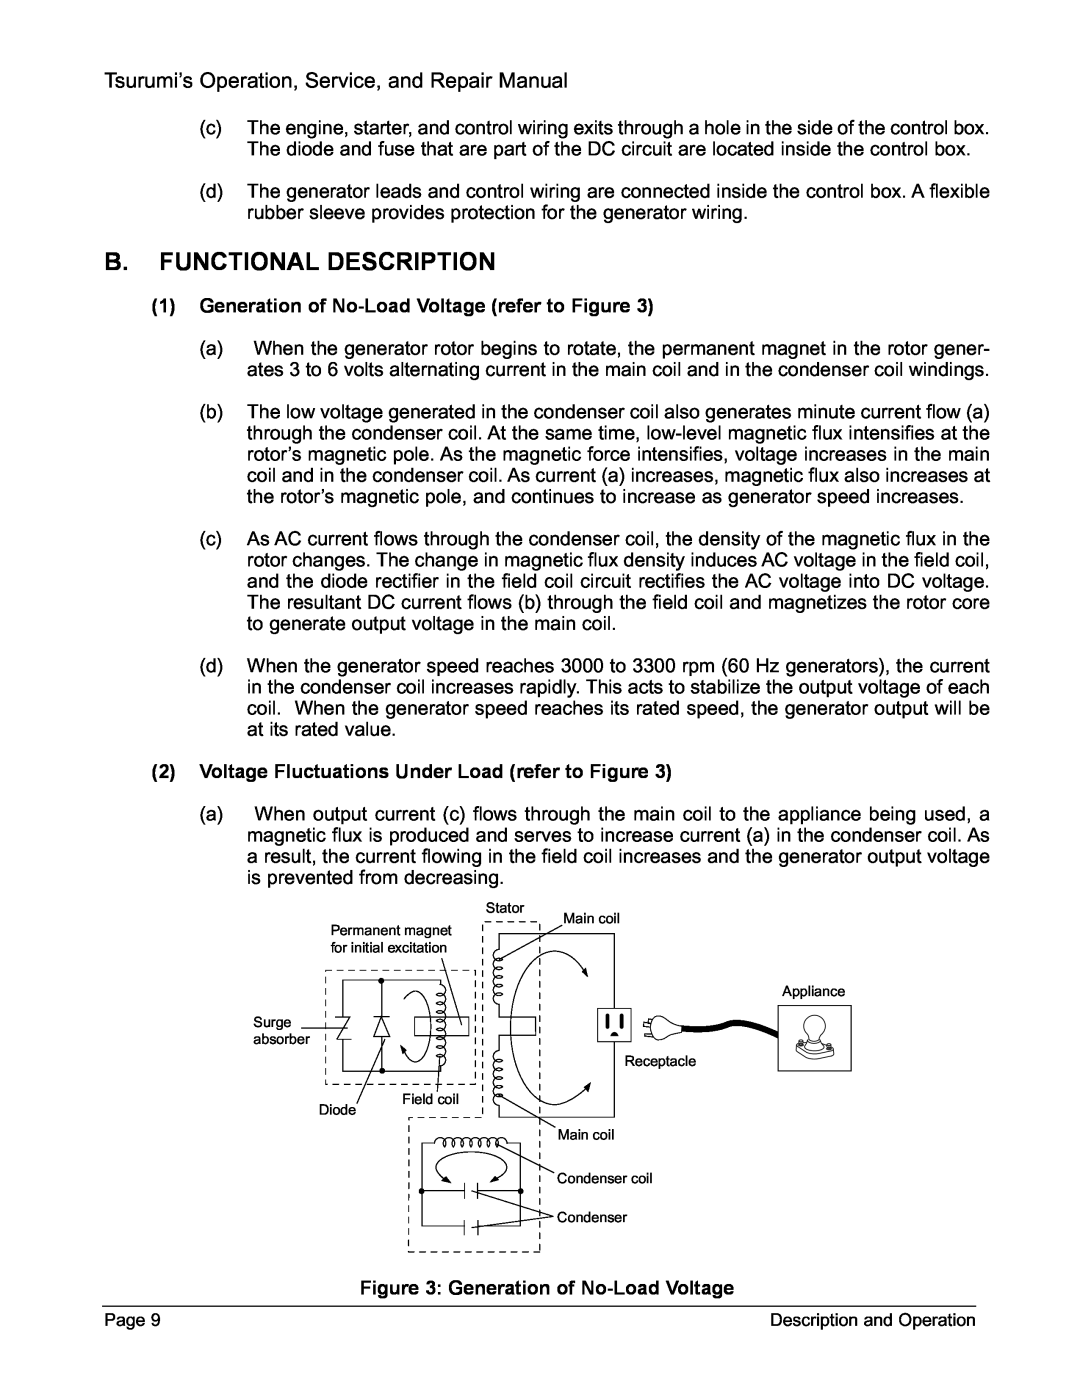 Honda Power Equipment TPG-2900H-DX, TPG-6000H-DX B.Functional Description, Tsurumi’s Operation, Service, and Repair Manual 